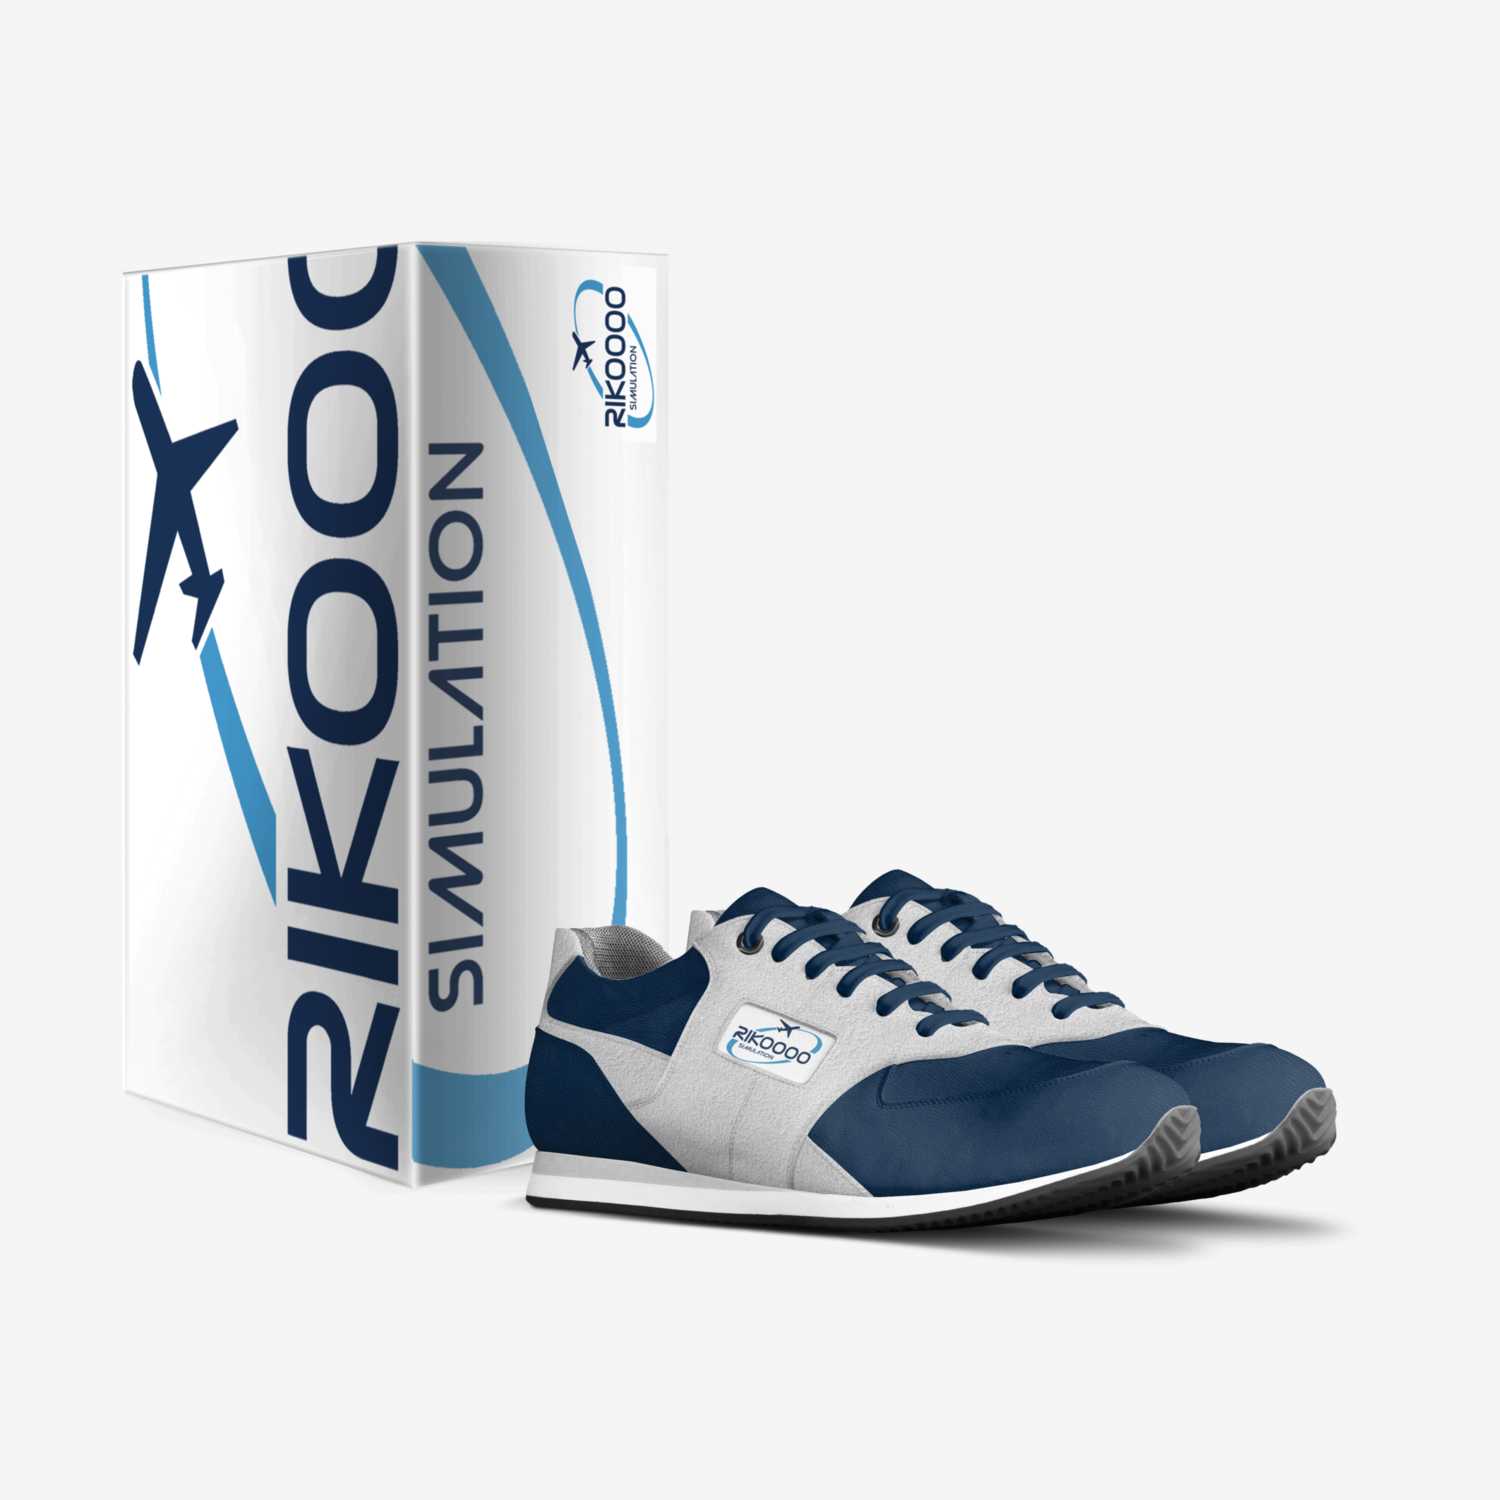 Rikoooo custom made in Italy shoes by Erik Bender | Box view